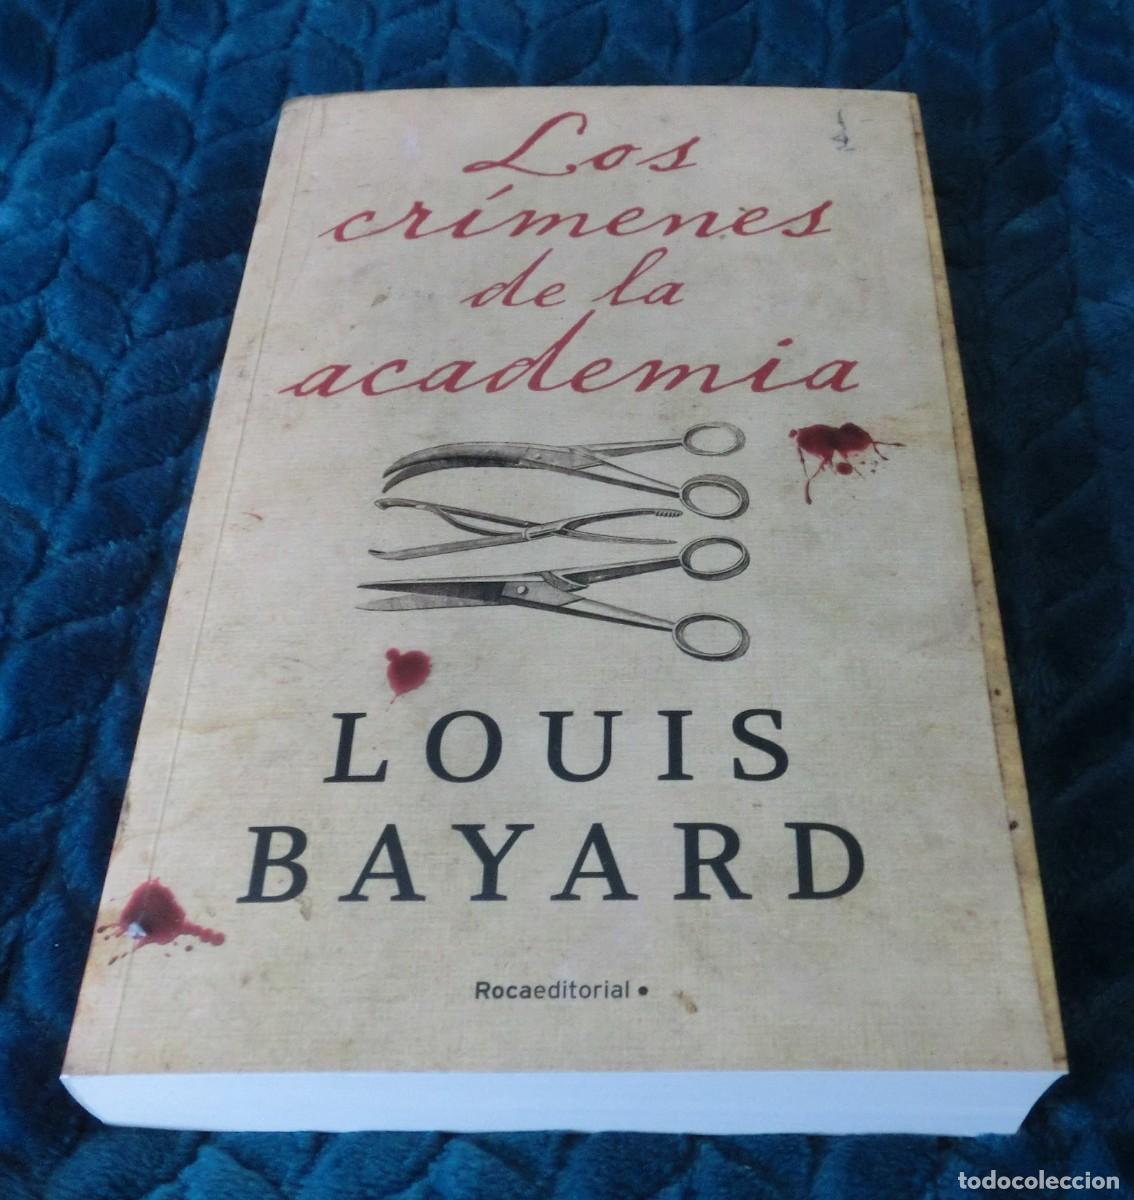 LOUIS BAYARD LOS cr�menes de la academia / The Pale Blue Eye (Paperback)  $51.61 - PicClick AU